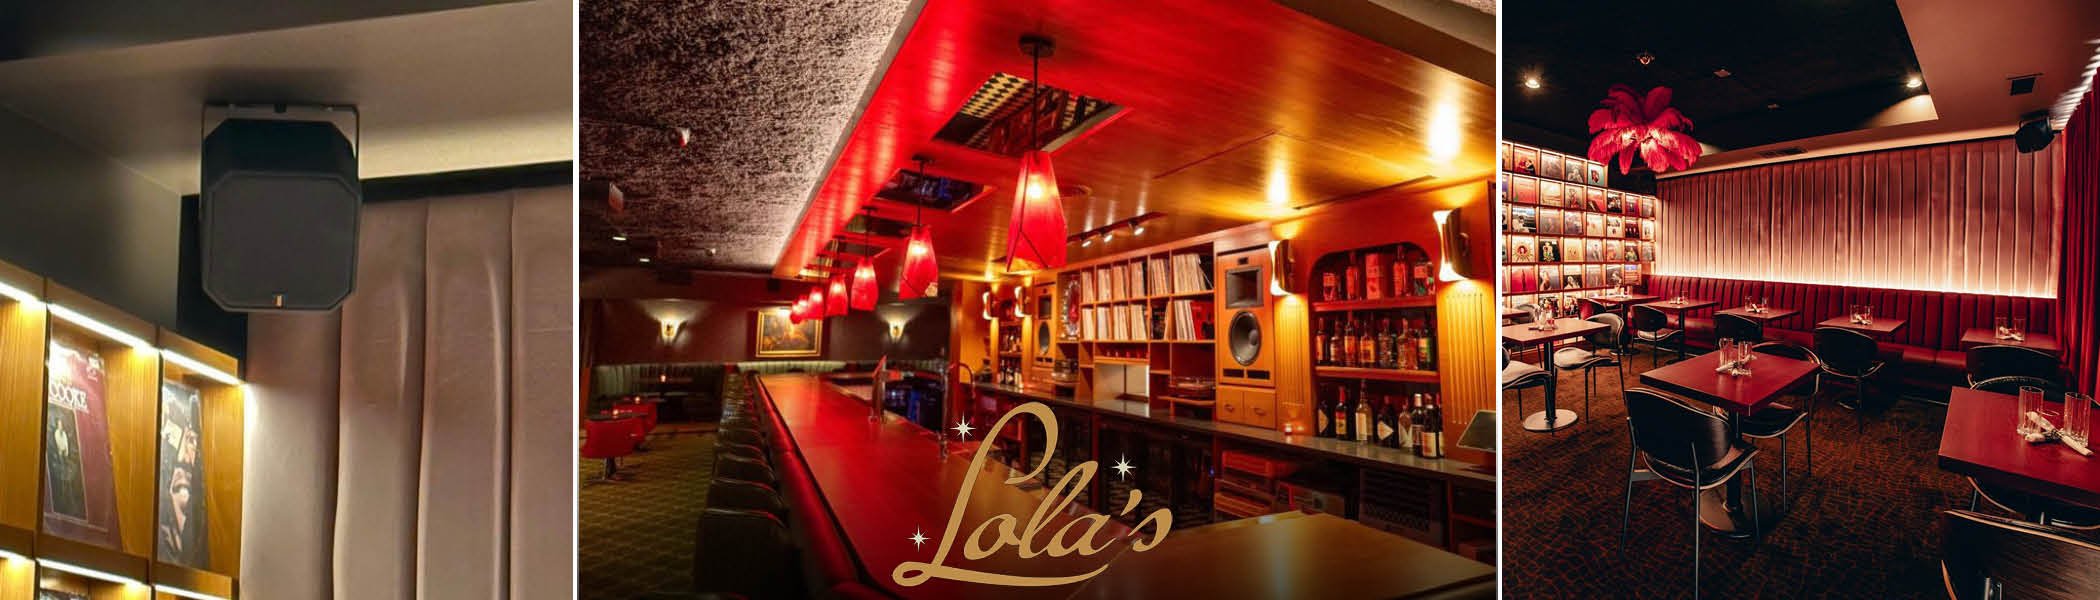 Lola's Hi-Lo Lounge Banner.jpg